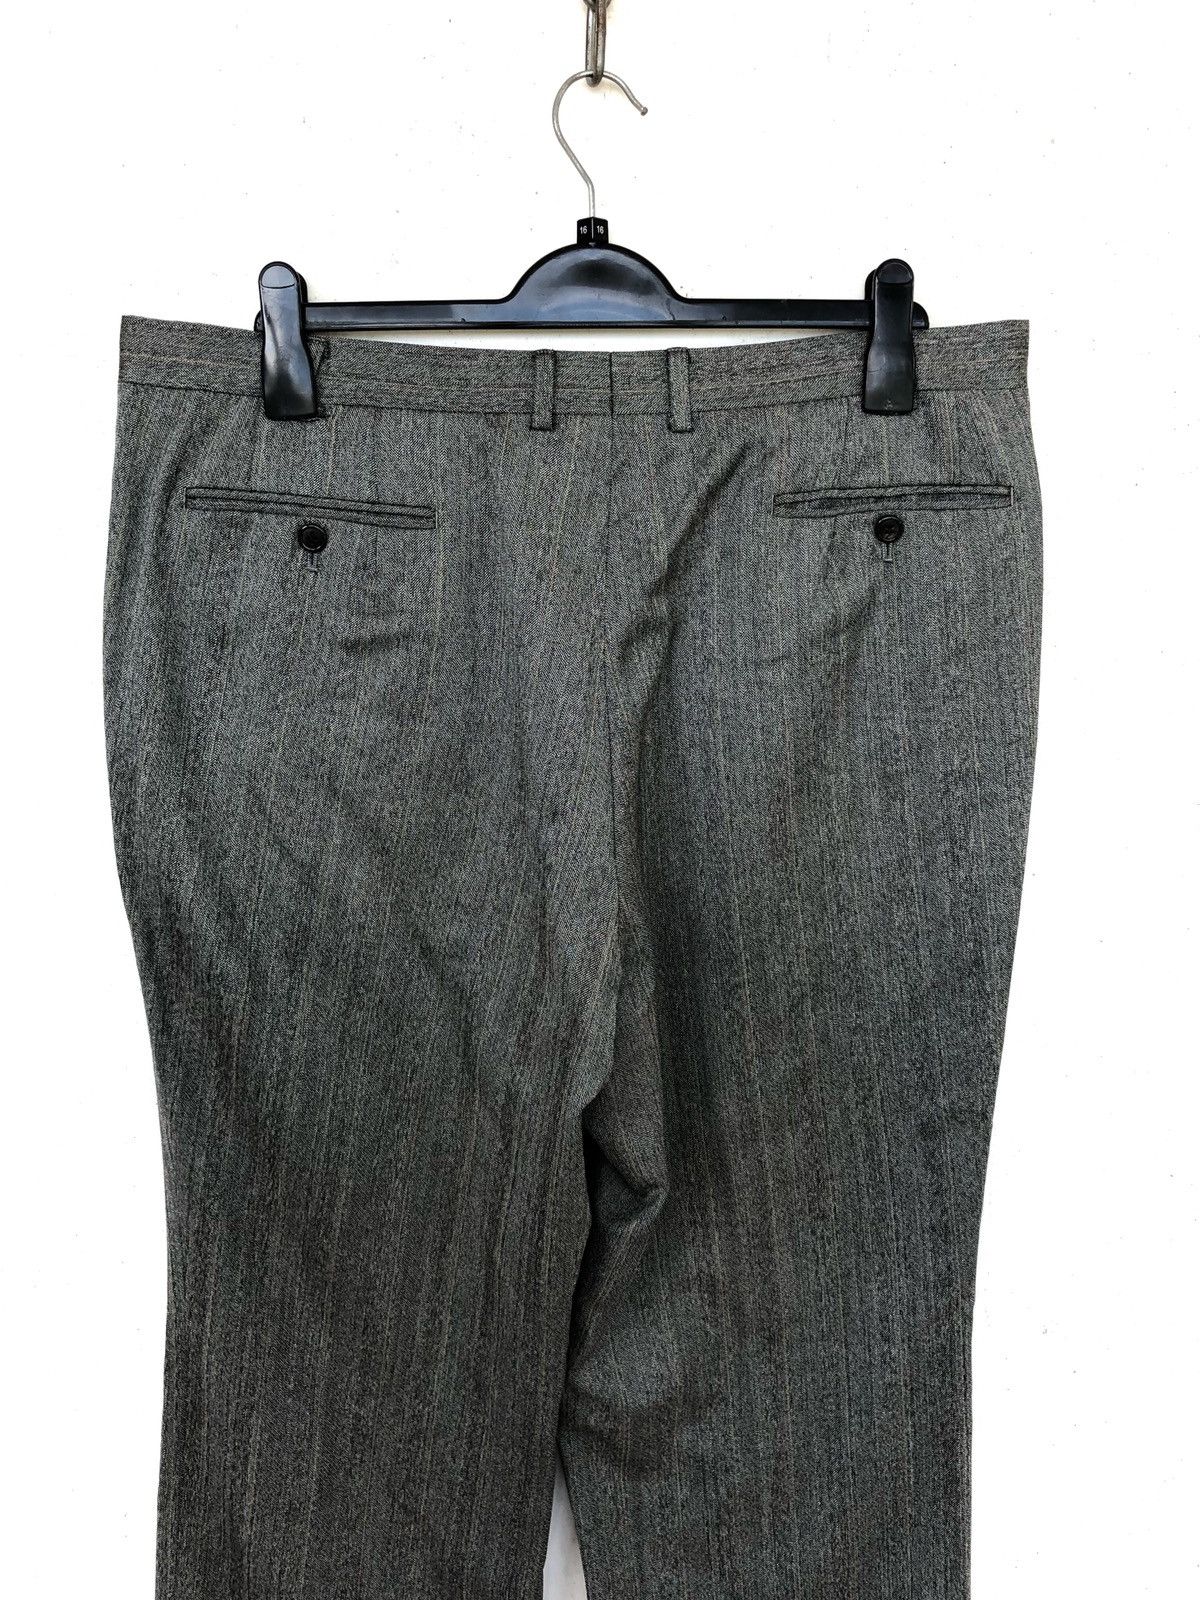 Lanvin GRAIL🔥Lanvin Paris Grey Striped Wool Oversized Baggy Pants Size US 38 / EU 54 - 7 Thumbnail